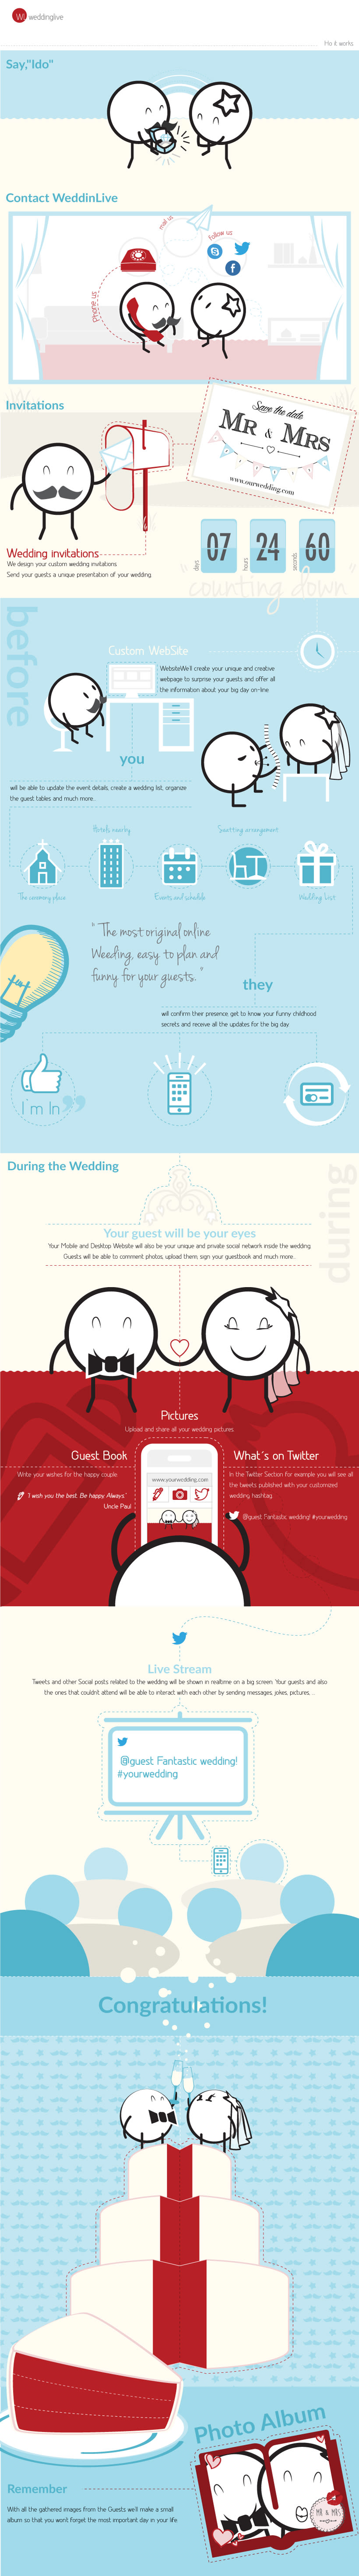 WeddingLive - Infografía 1